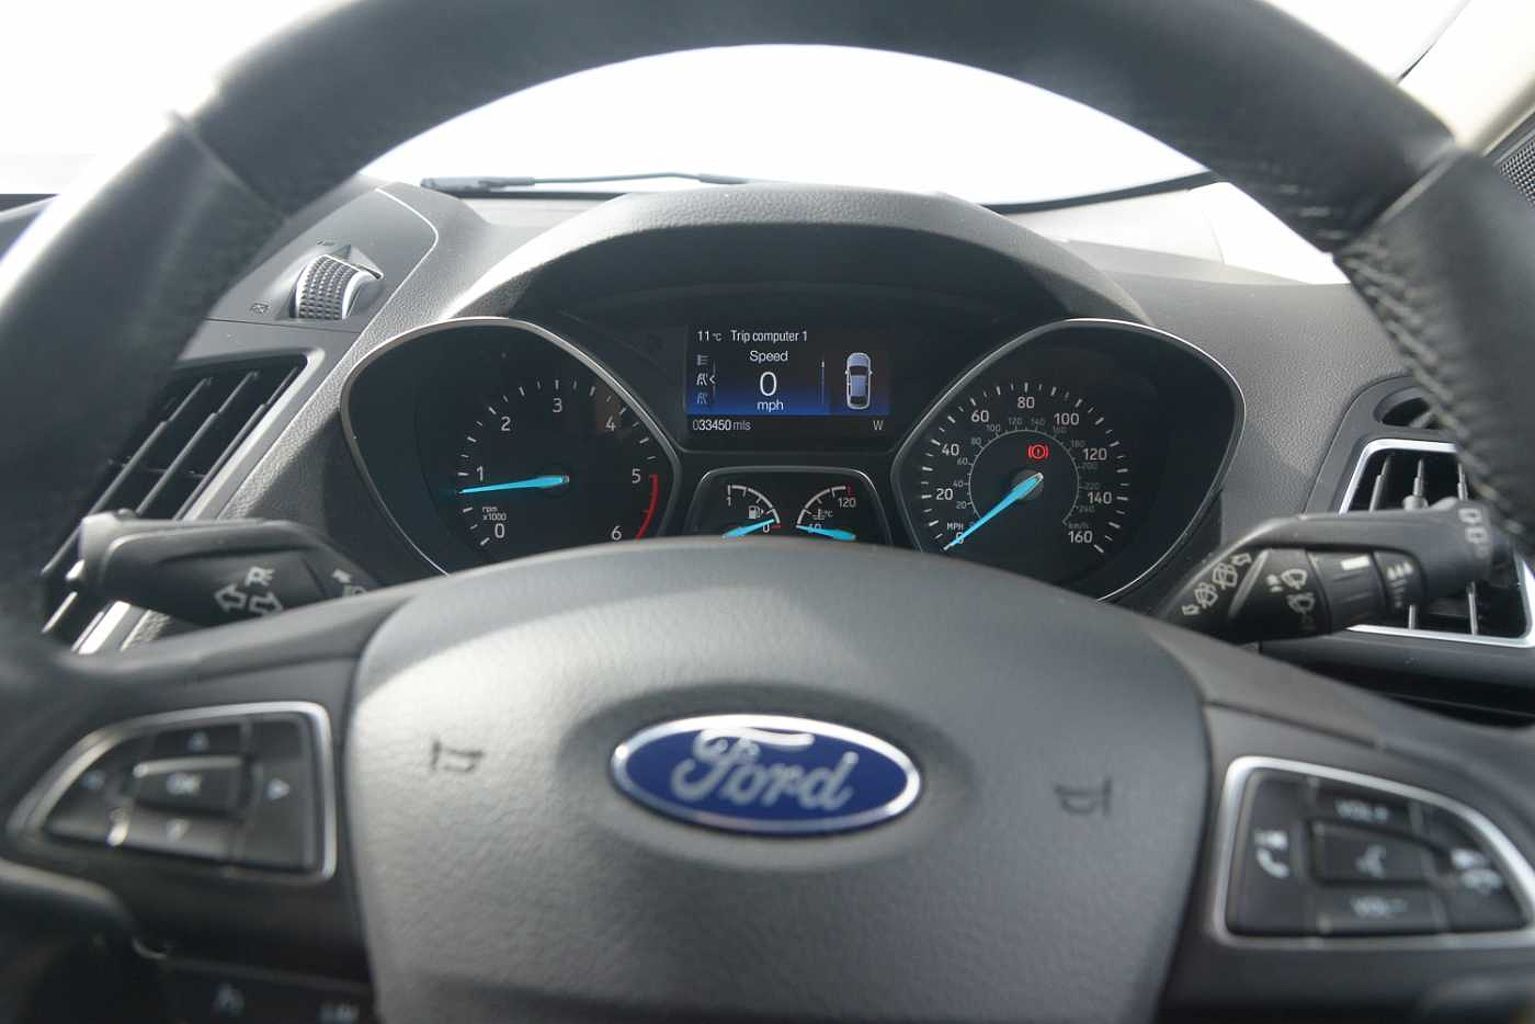 Ford Kuga 2.0 TDCi Titanium (150 PS) 5-Door MPV